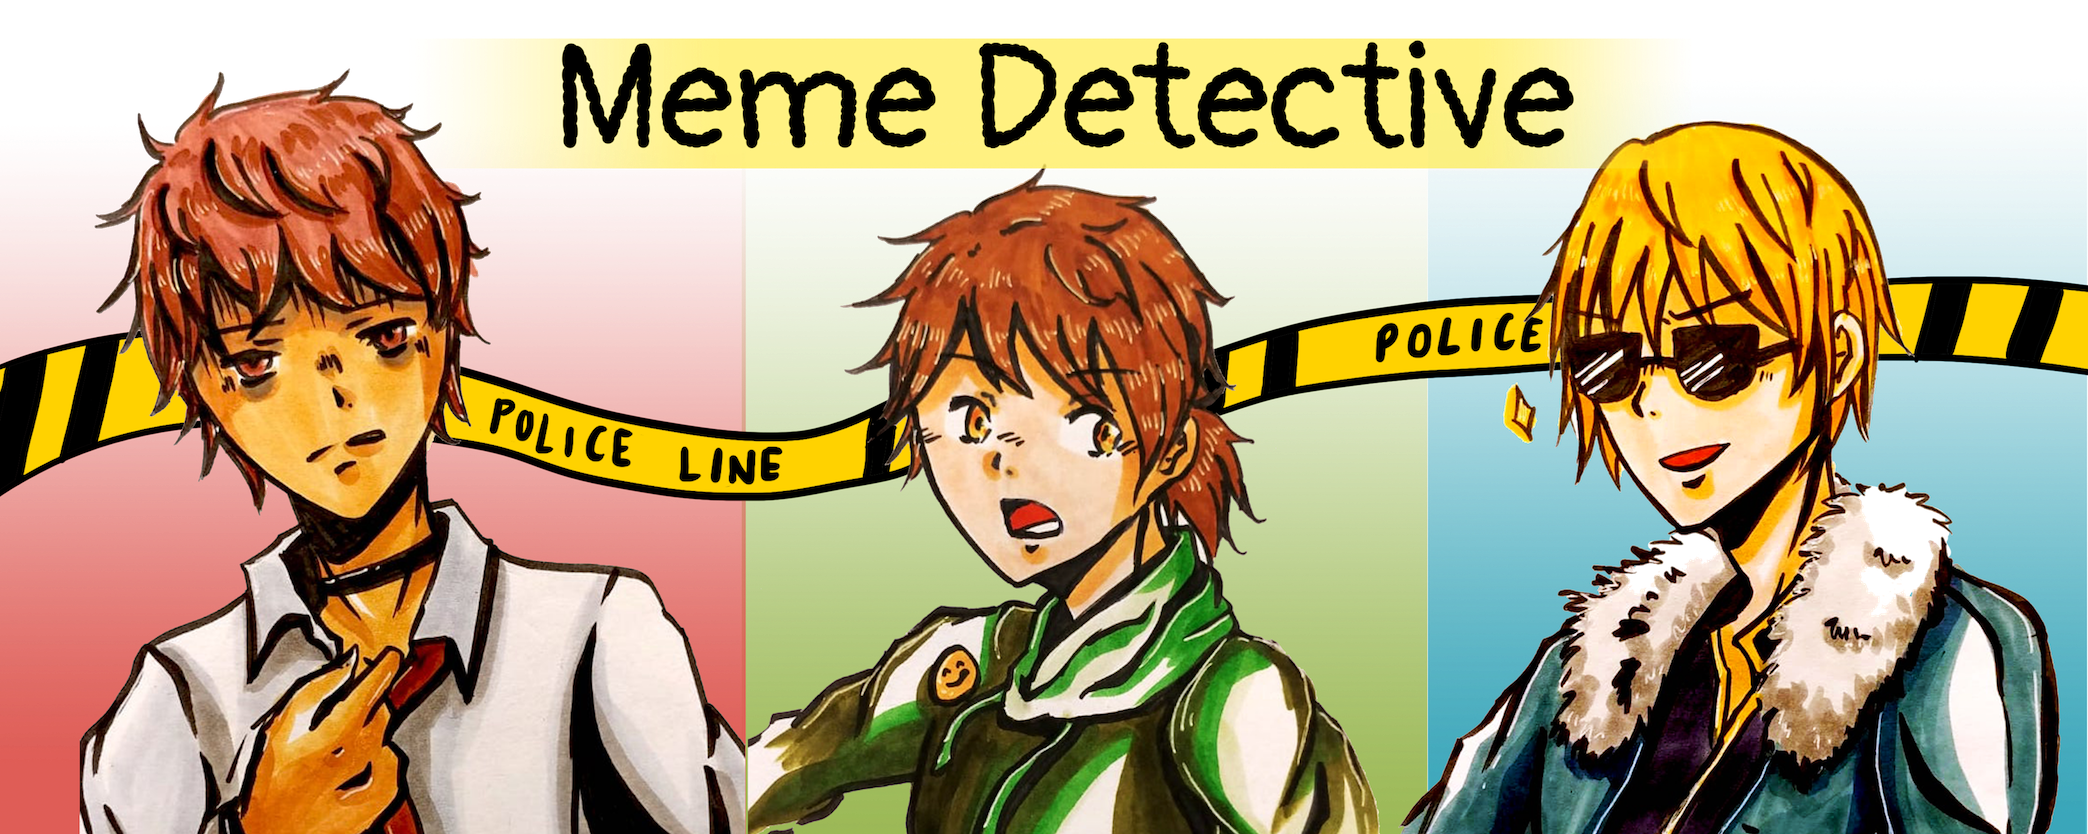 Meme Detective